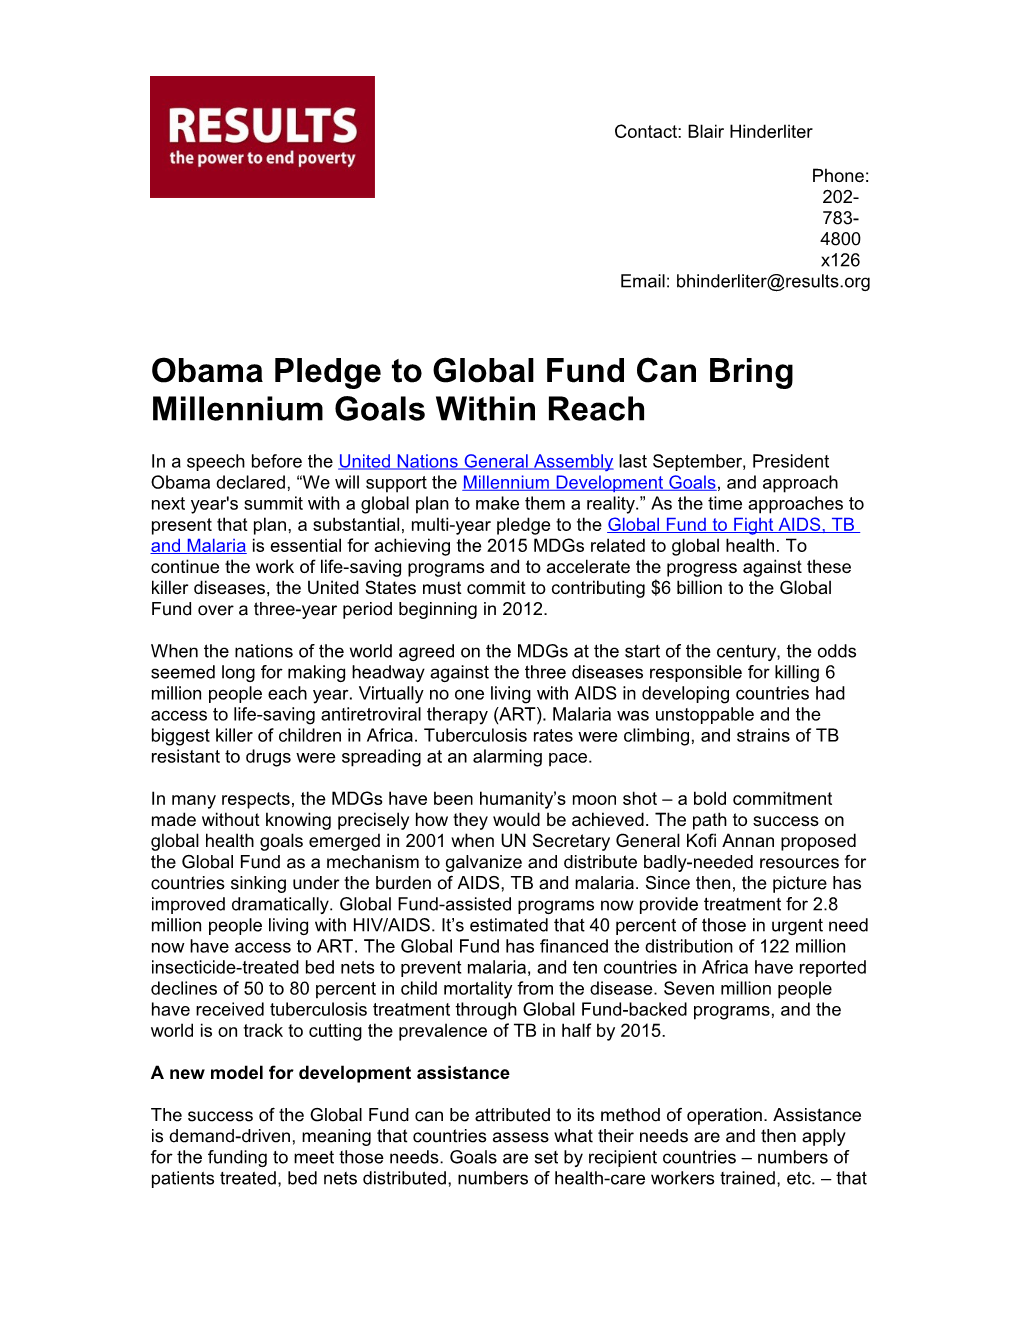 Obama Pledge to Global Fund Can Bring Millennium Goals Within Reach